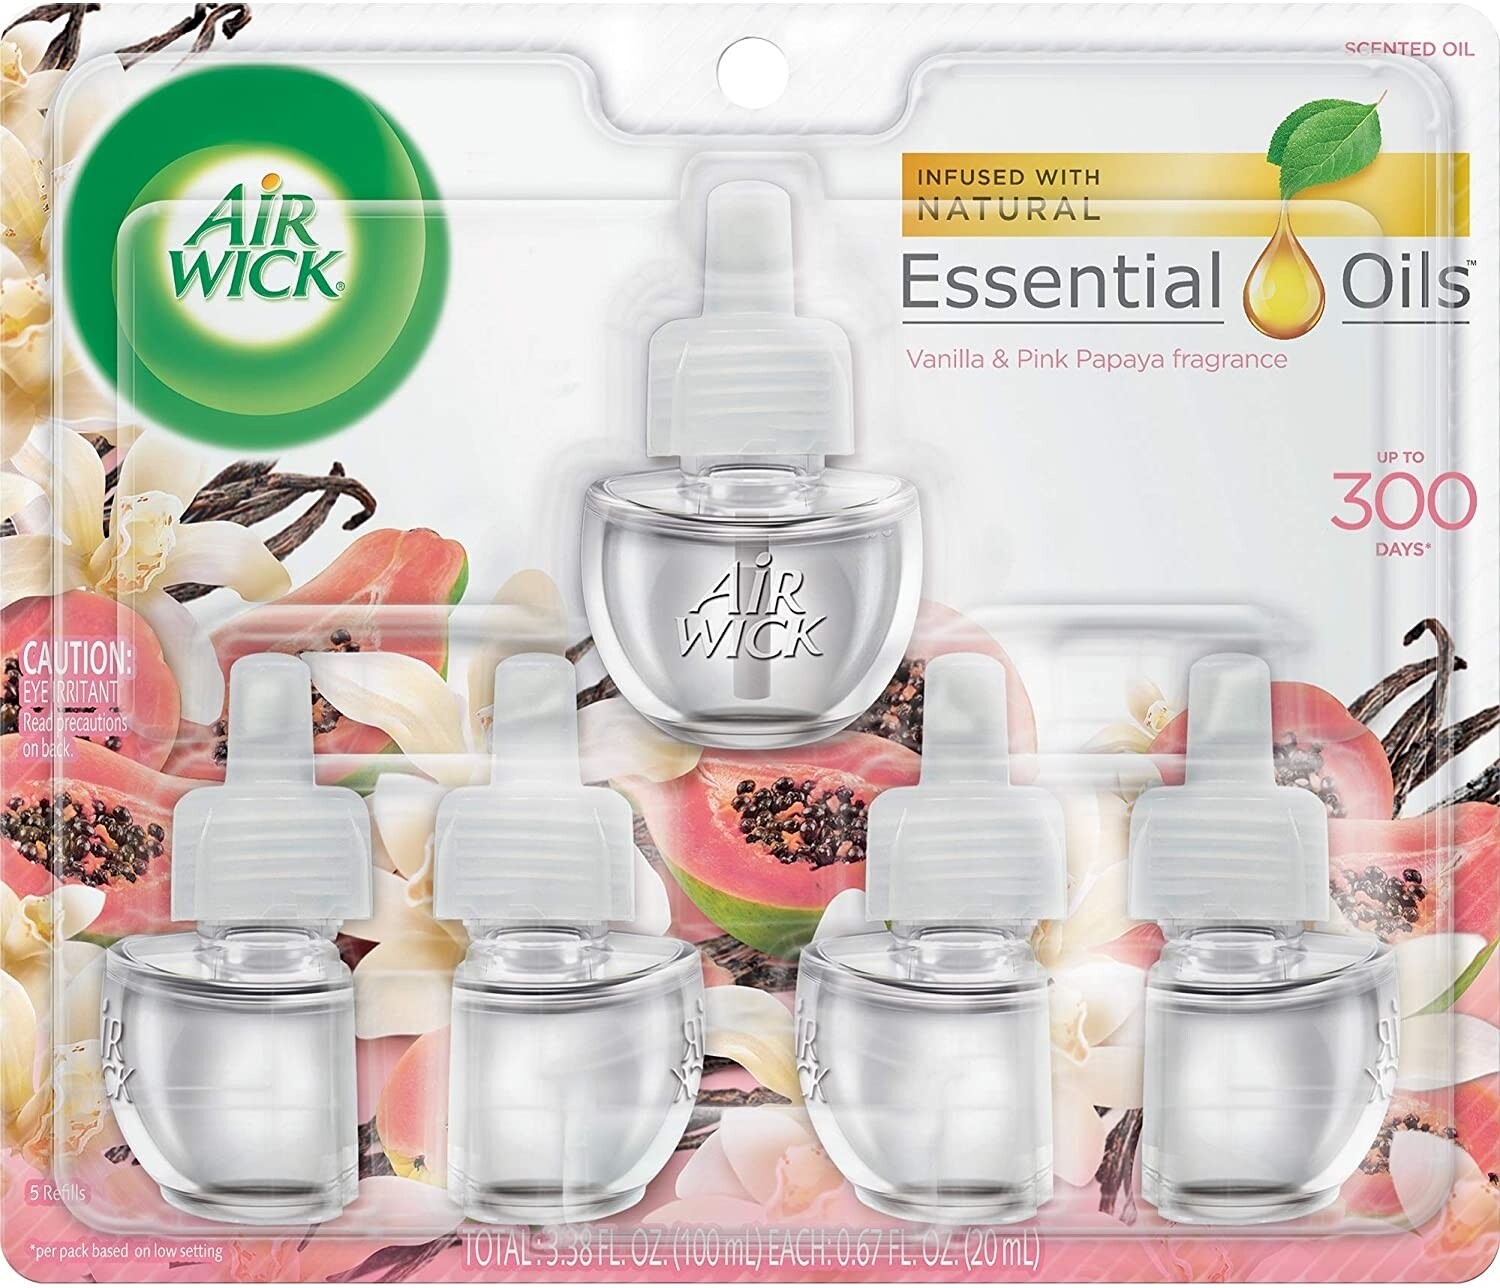 Air wick refill per bottle- Vanilla and Pink Papaya 